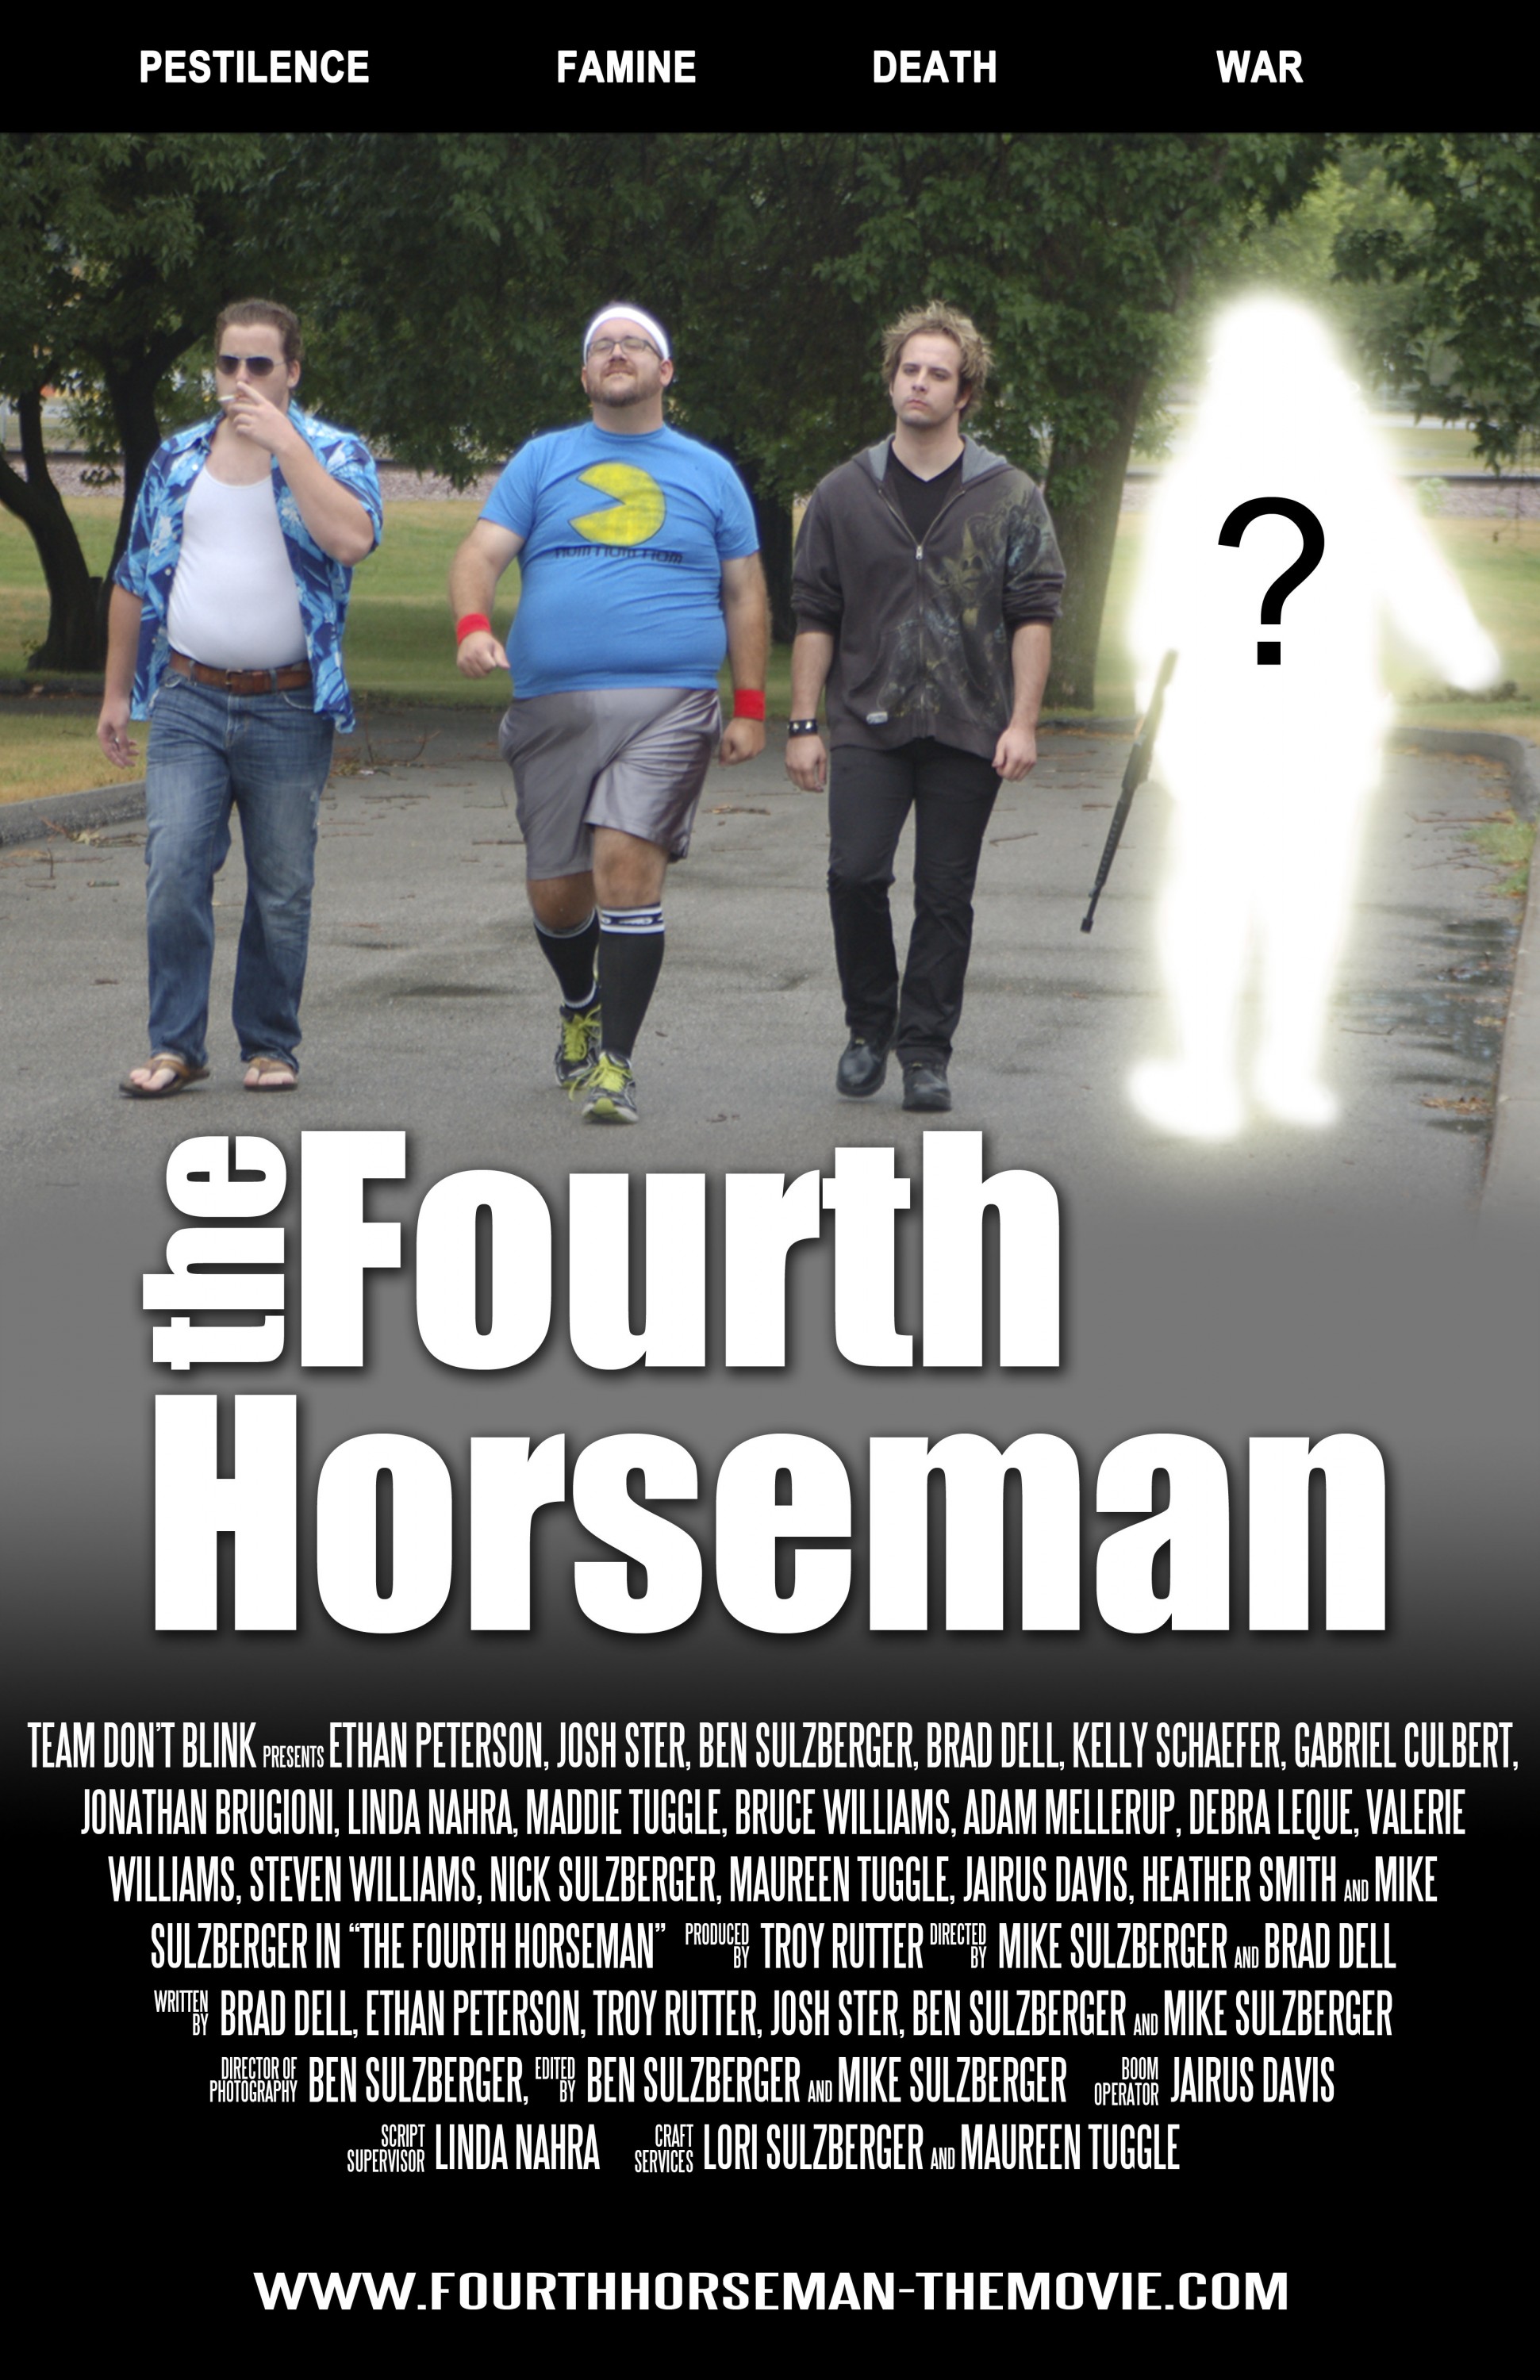 Mega Sized Movie Poster Image for The Fourth Horseman